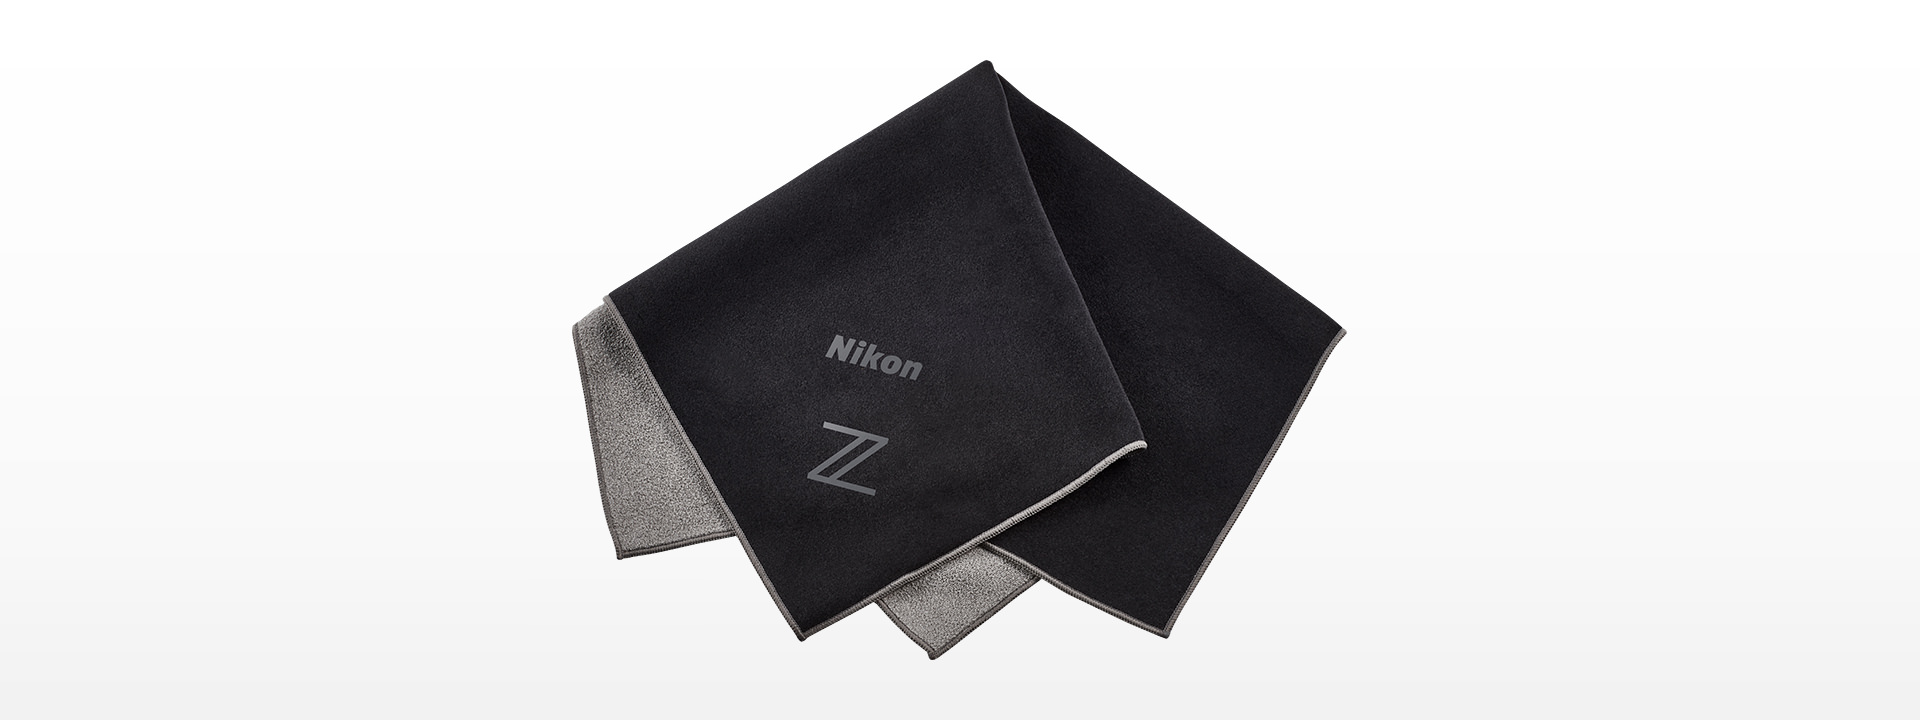 Nikon Z シリーズ用ニコンオリジナルイージーラッパー L